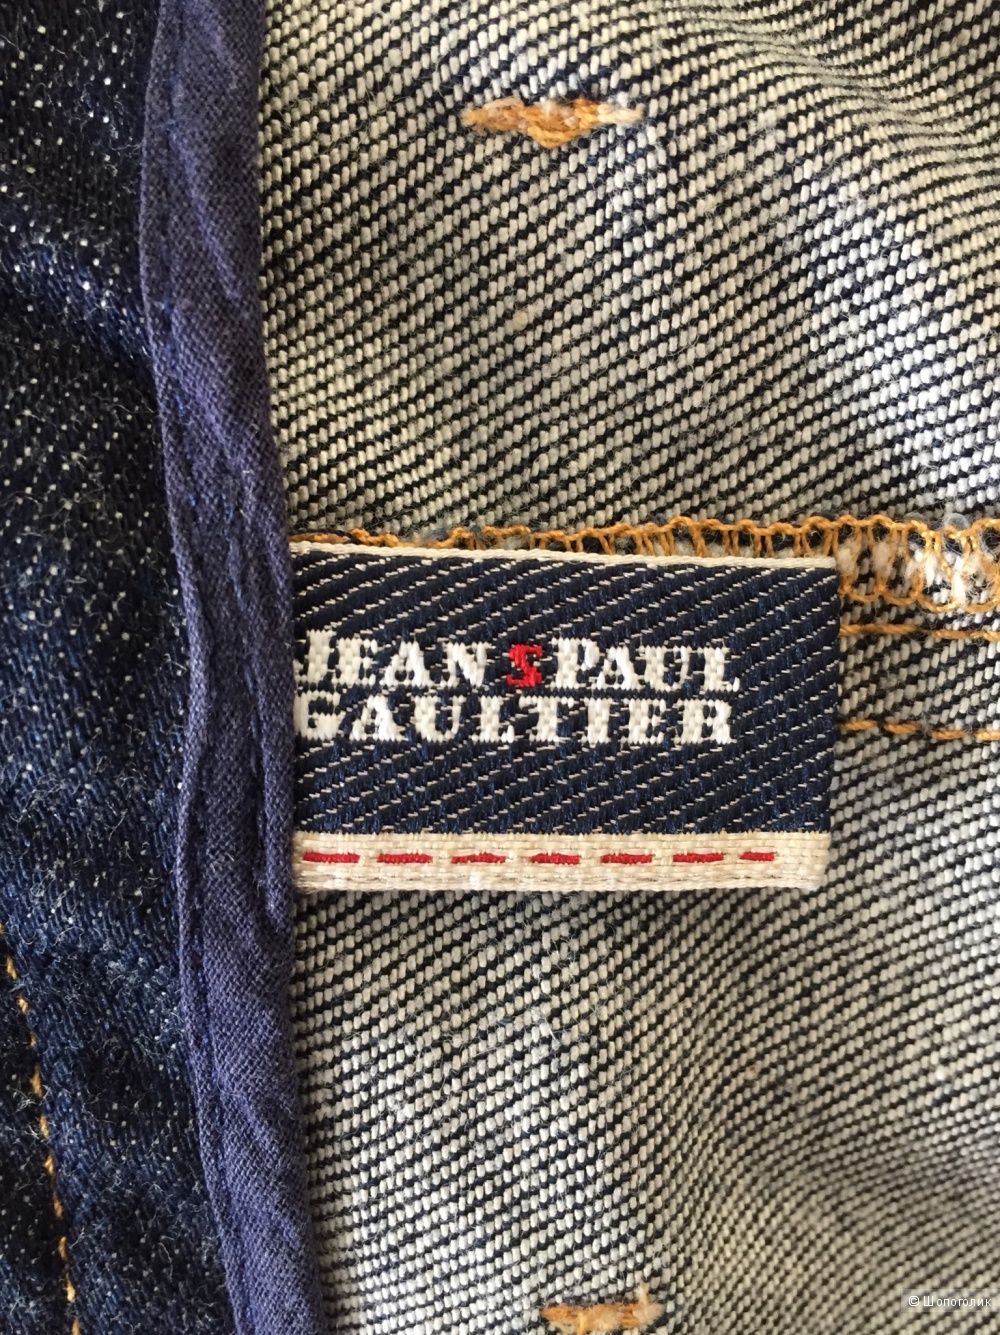 Юбка Jean’s Paul Gaultier 44 размер